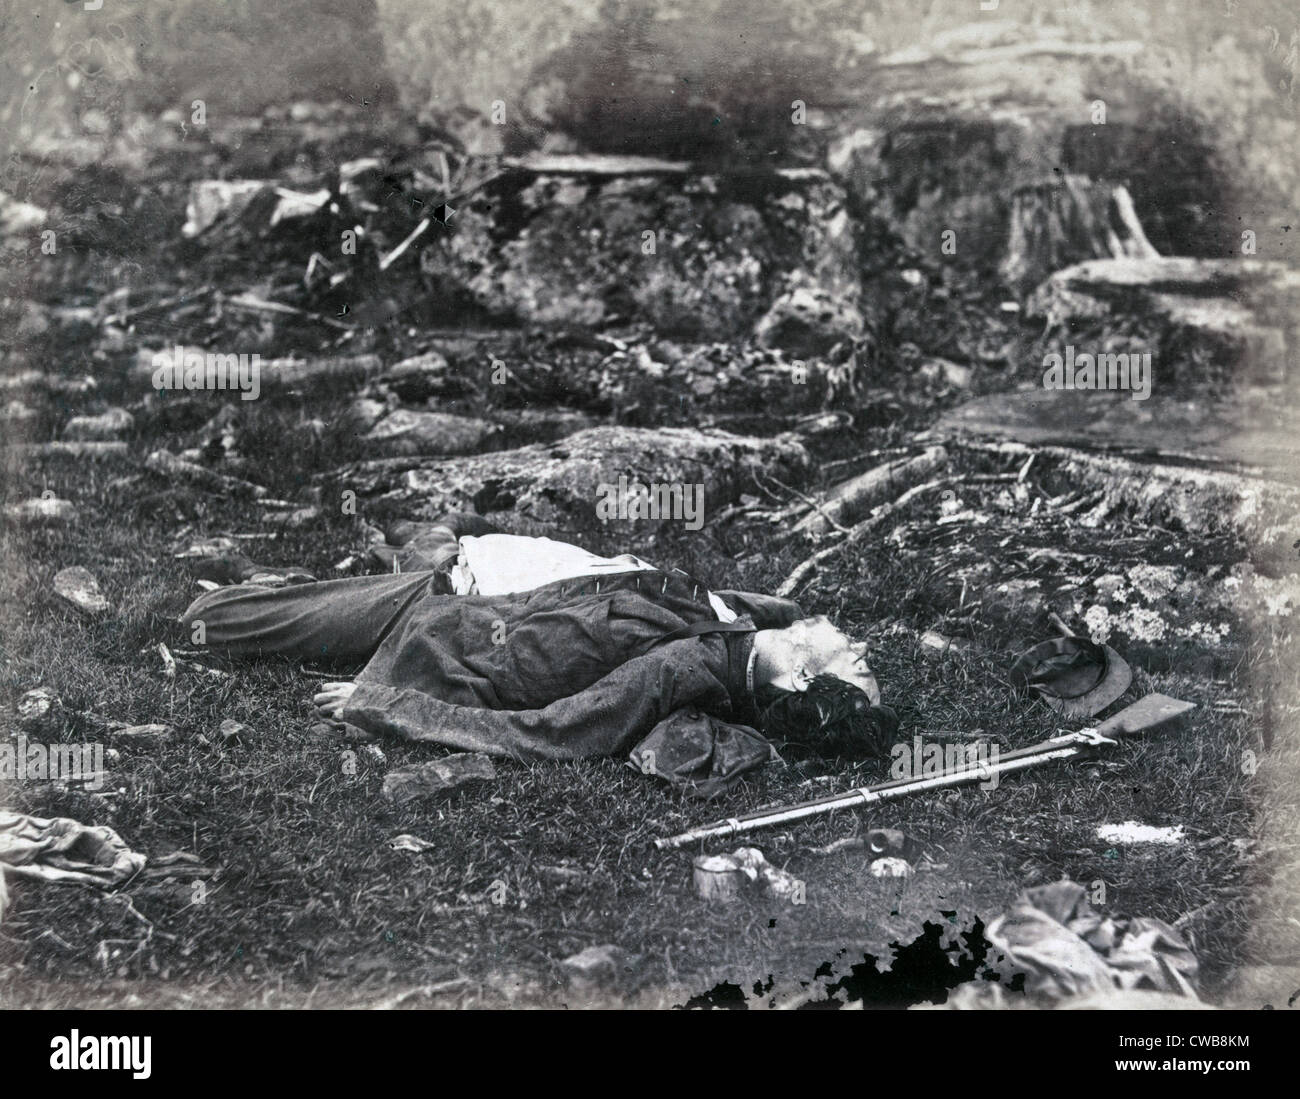 The Civil War. The Battle of Gettysburg. A sharpshooter's last sleep, Gettysburg, Pennsylvania. Alex Gardner, photographer. Stock Photo